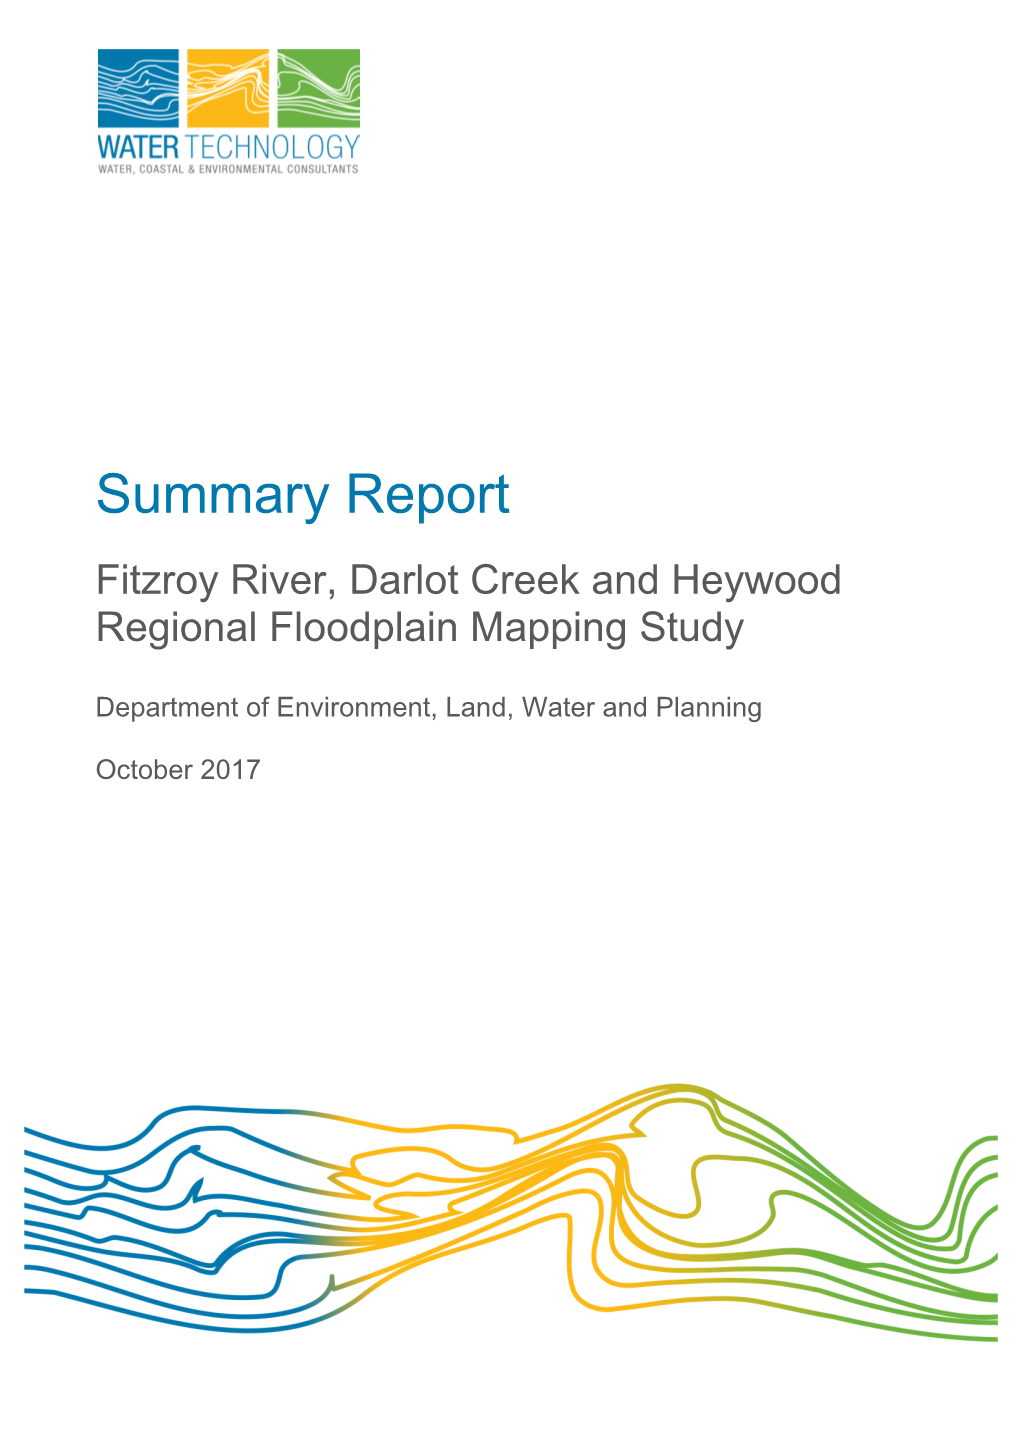 Summary Report Fitzroy River, Darlot Creek and Heywood Regional Floodplain Mapping Study